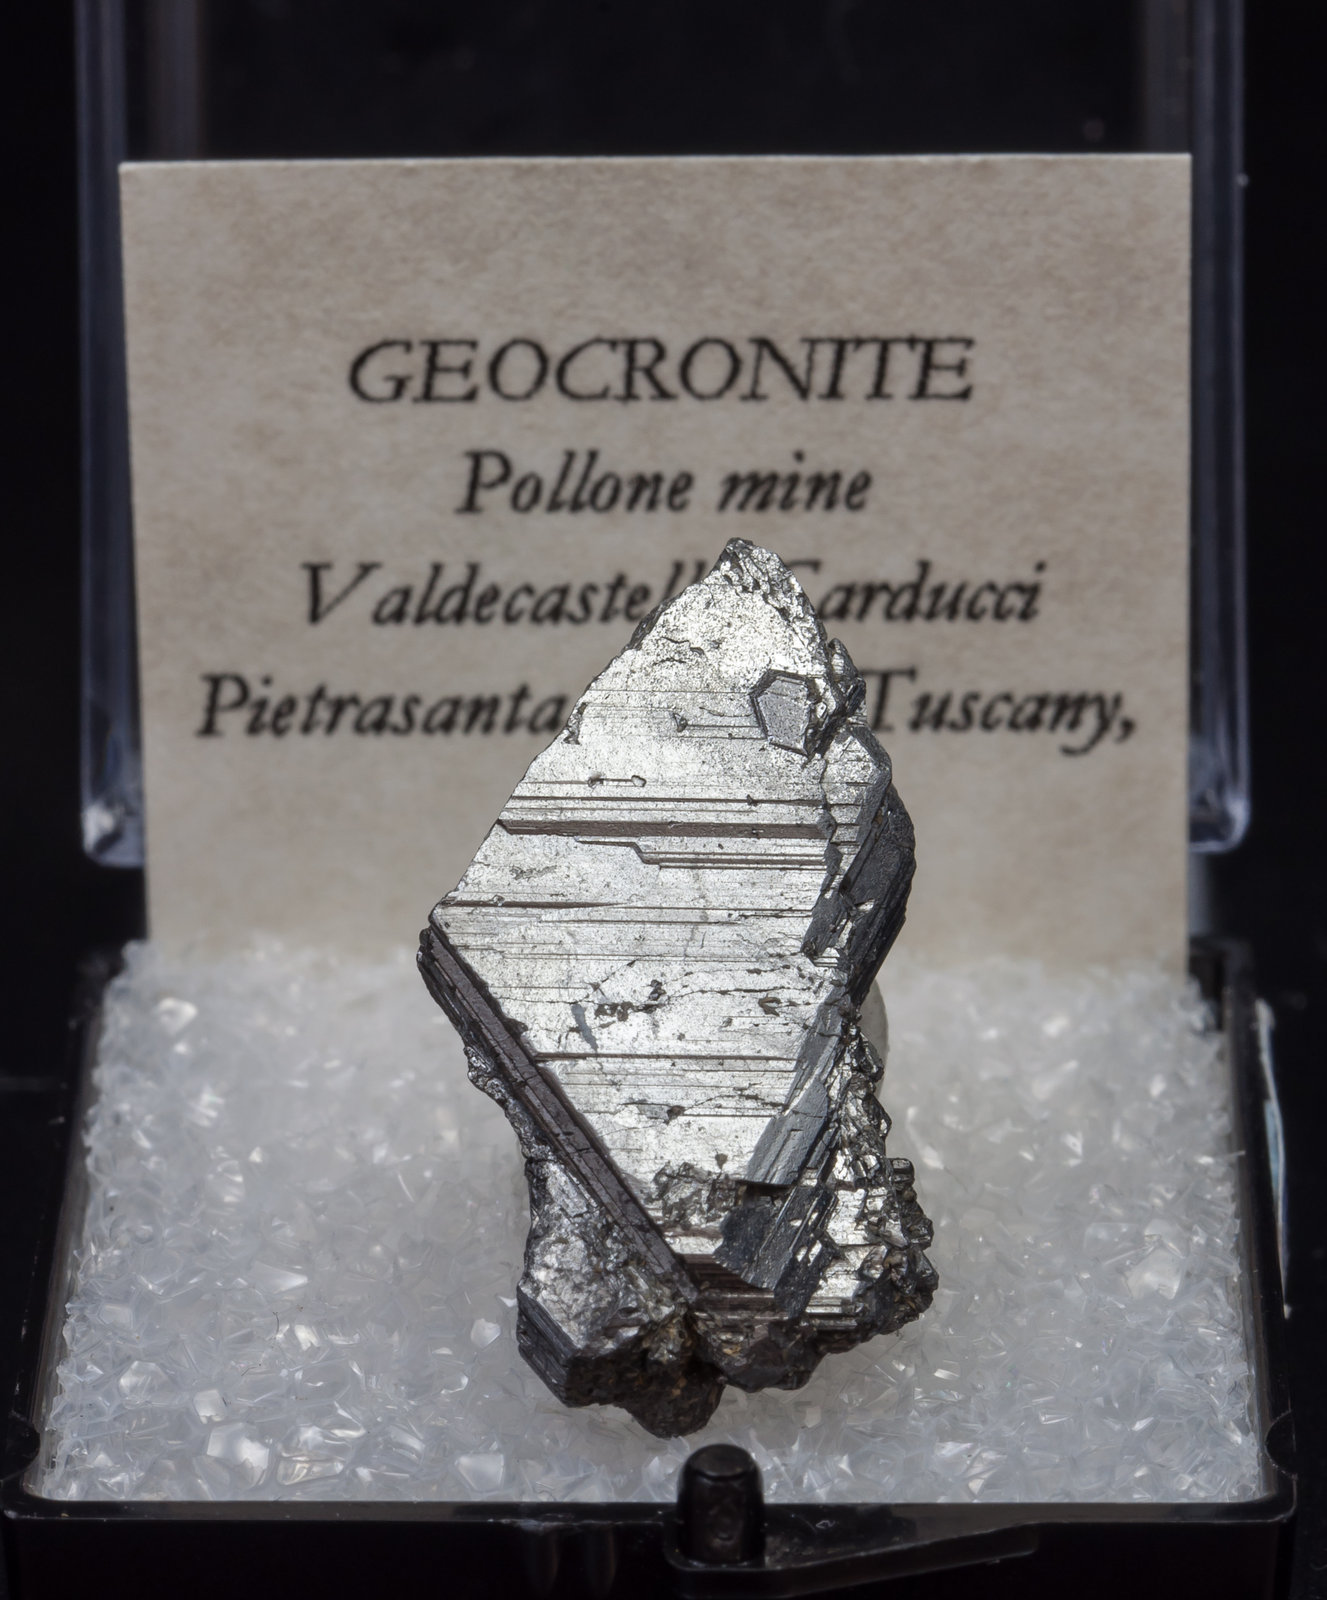 specimens/s_imagesAH6/Geocronite-TP26AH6f1.jpg